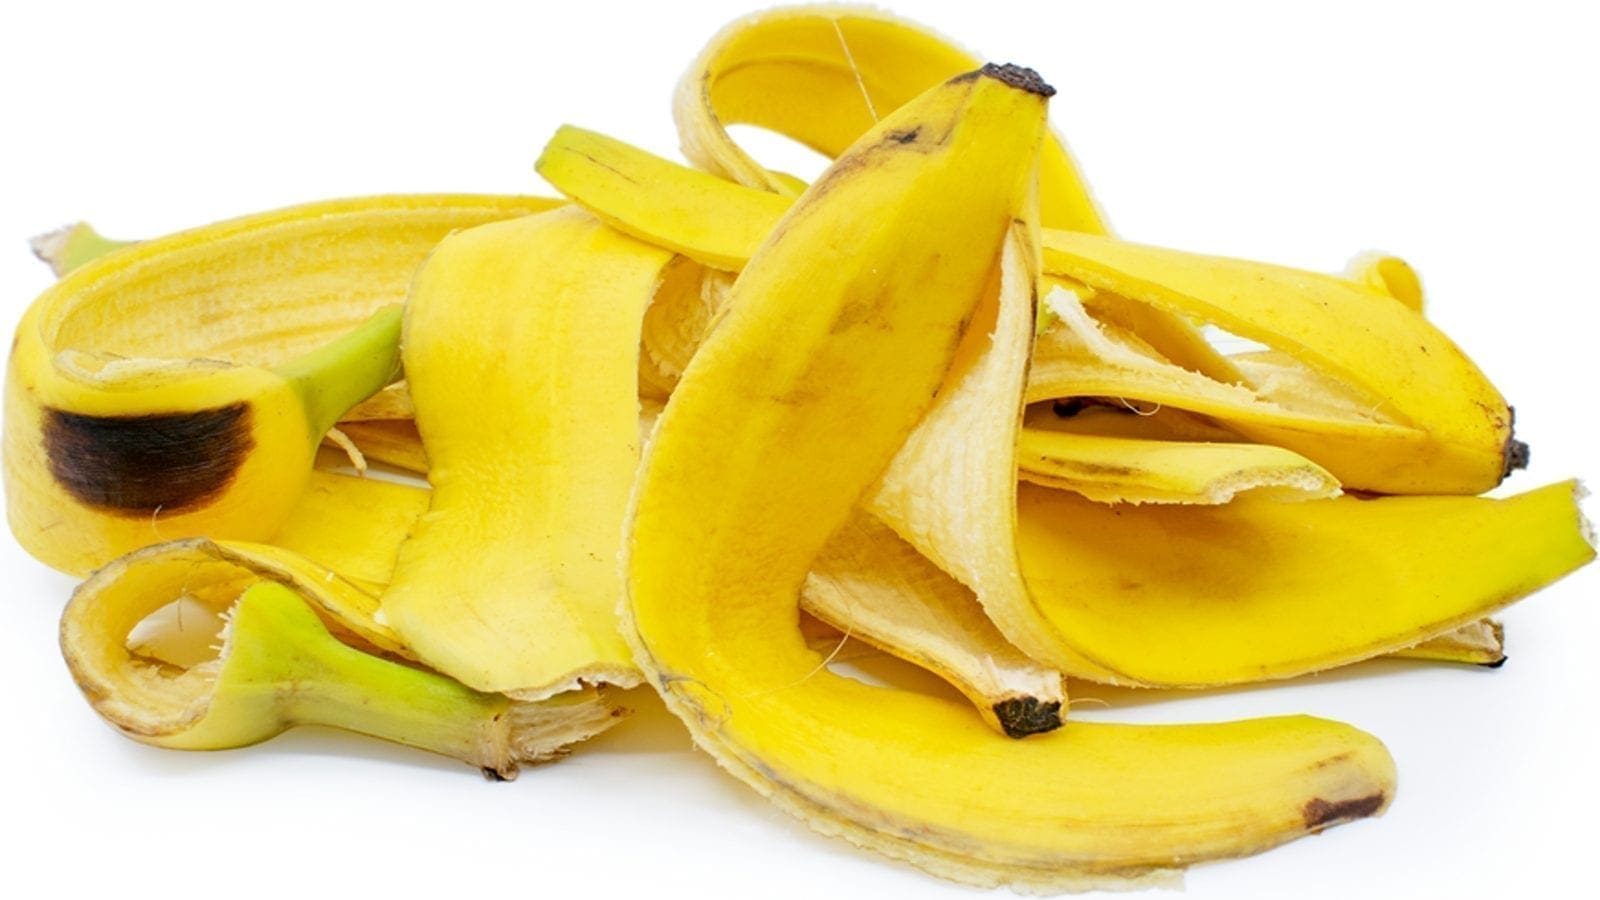 Global tropical fruit processor Frutco partners Fooditive to develop sweetener from banana peels